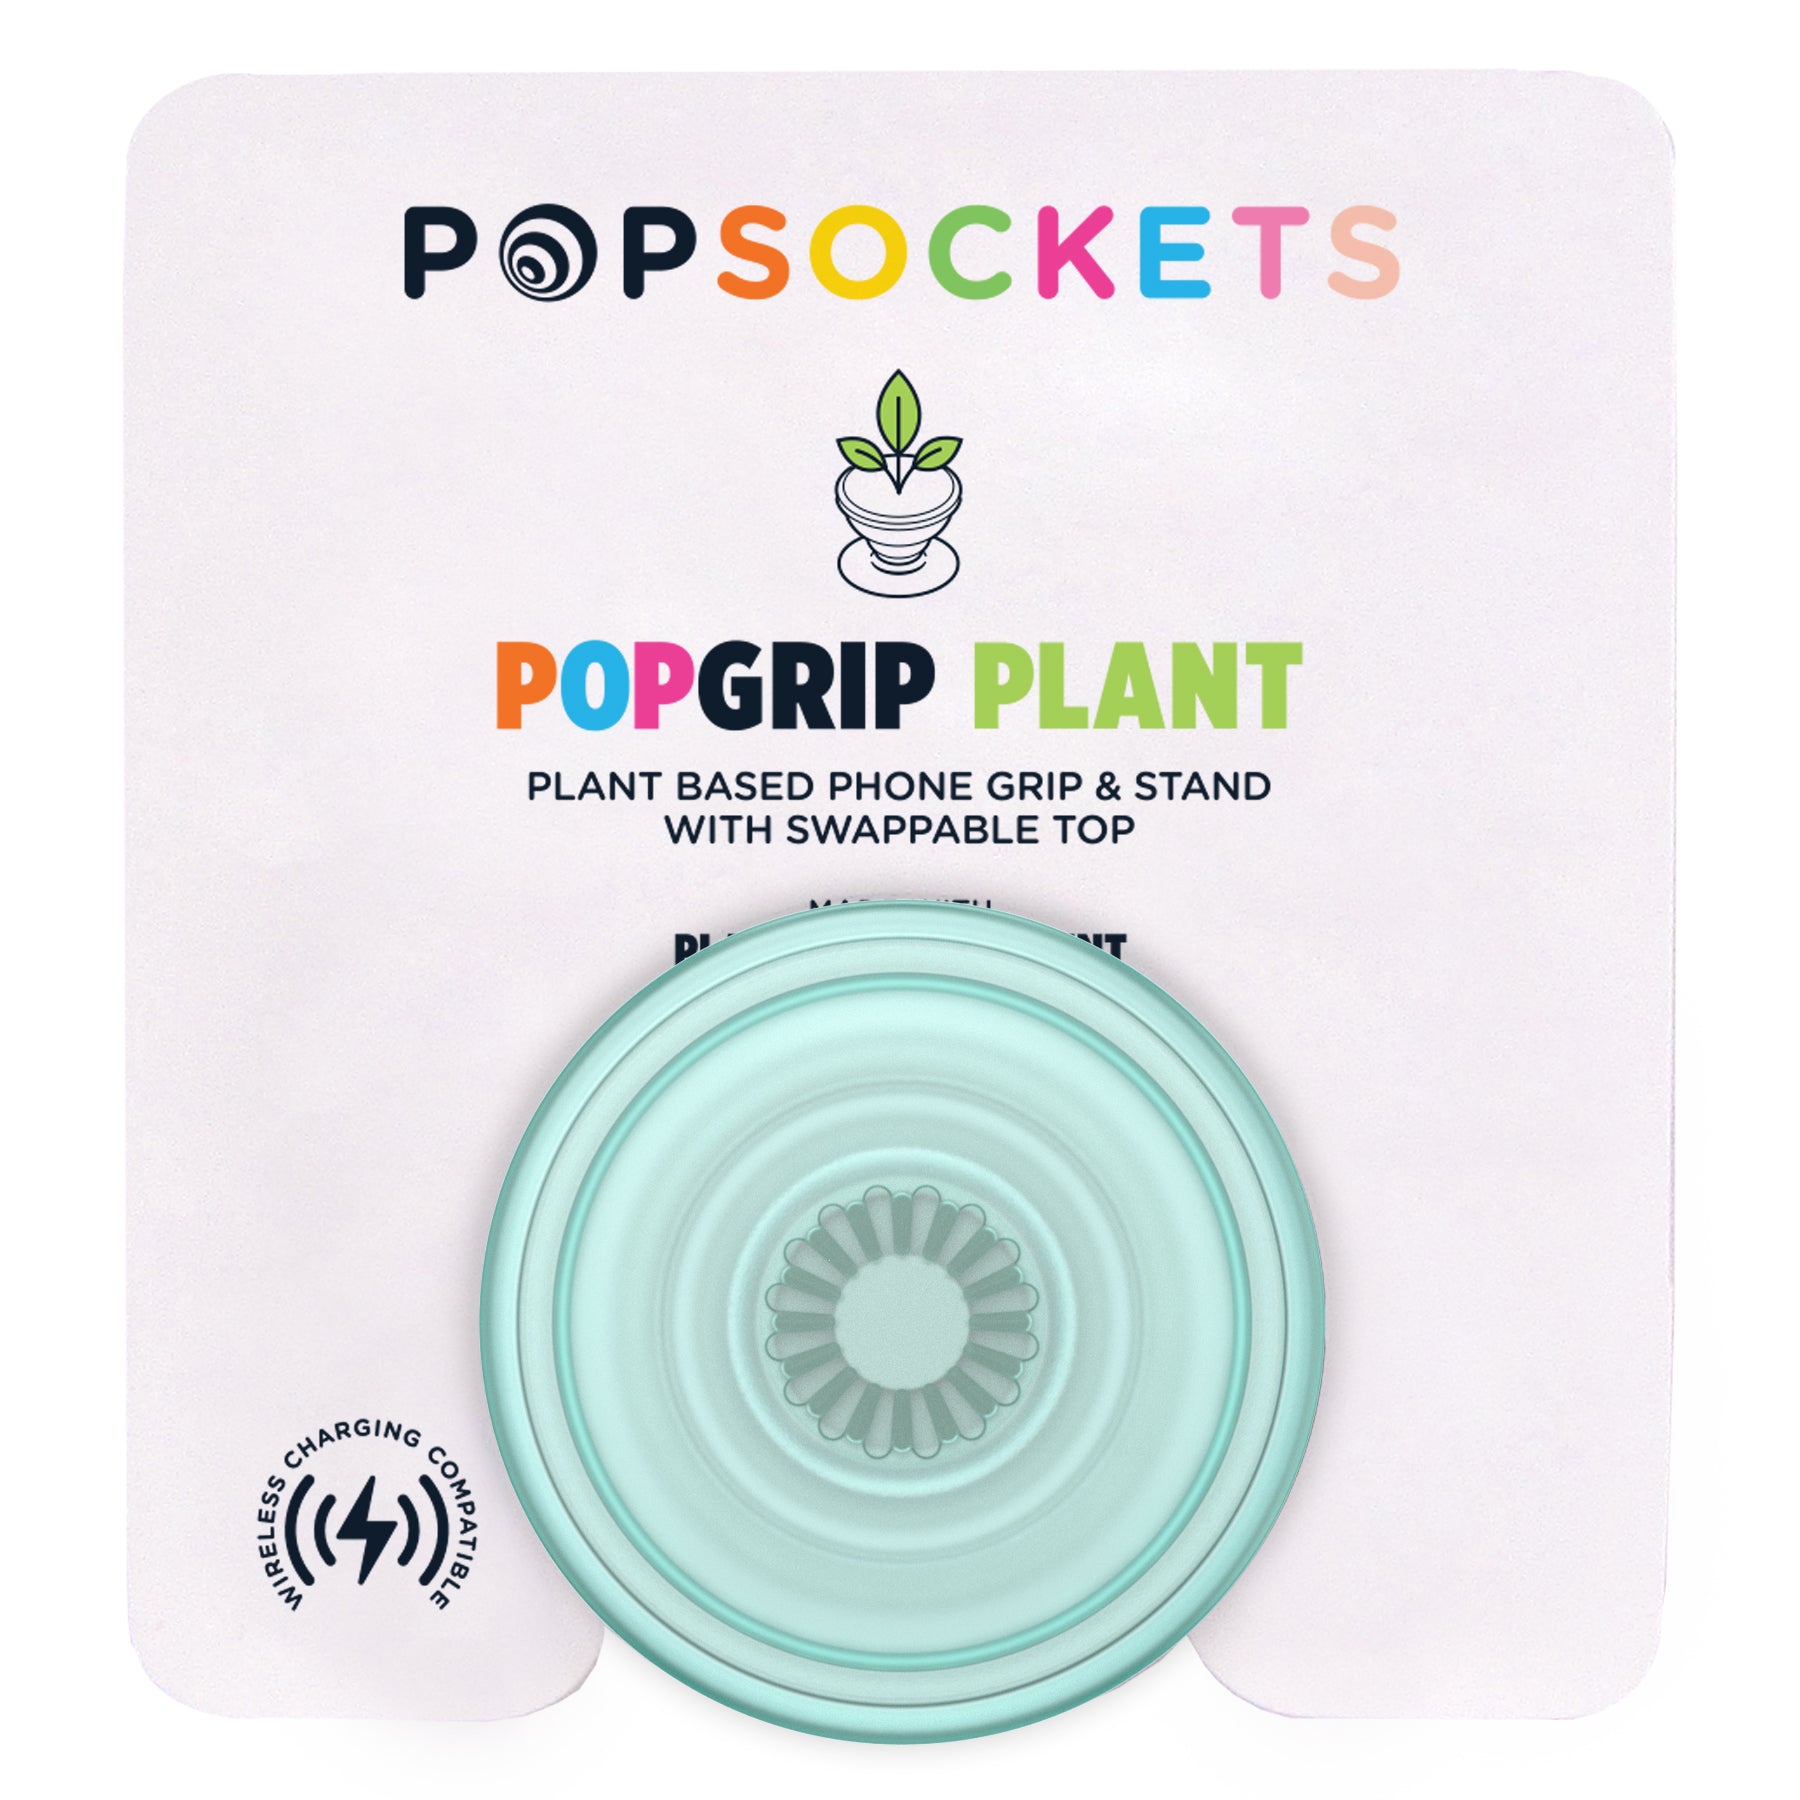 Popsockets PopGrip Plant